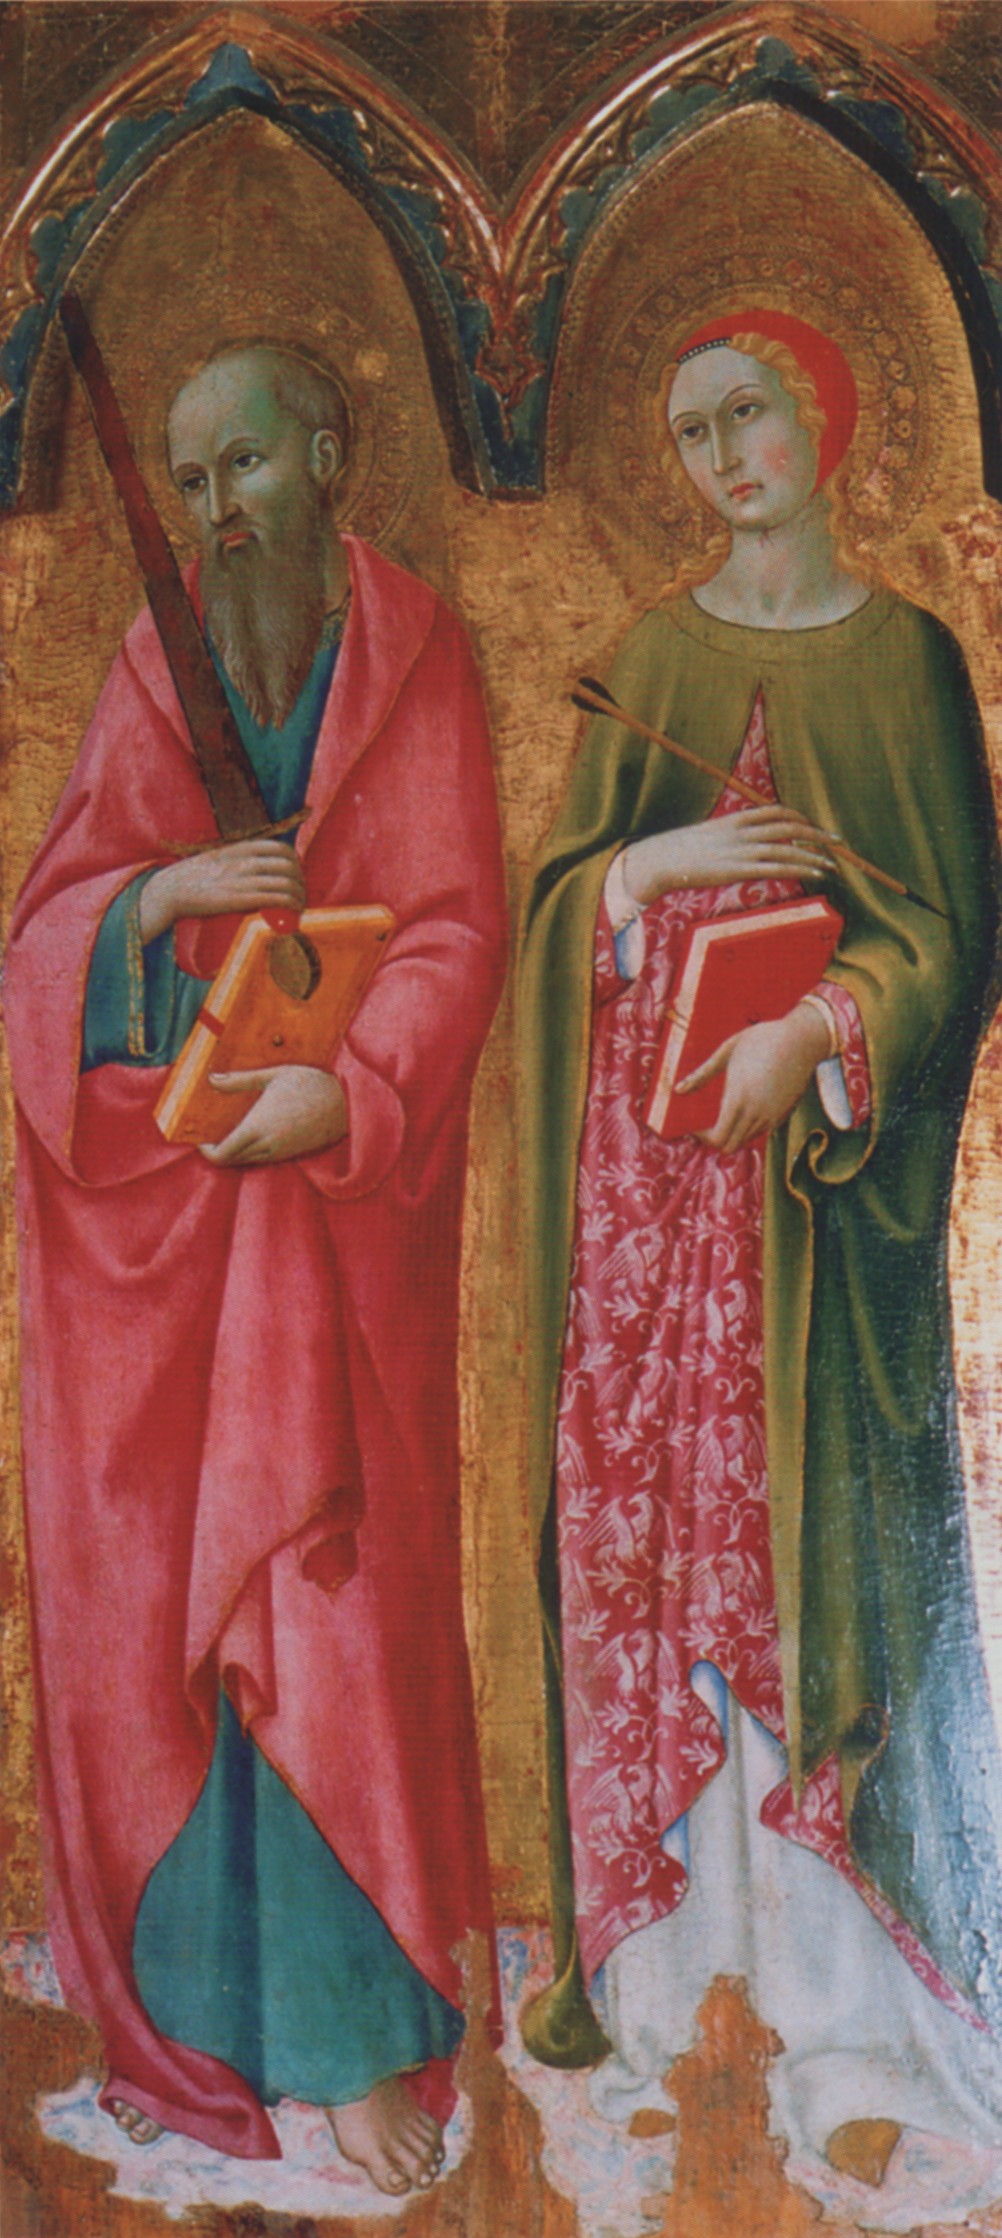 Sano di Pietro: Paulus und Christina, 1458, in der Basilika Santa Cristina in Bolsena